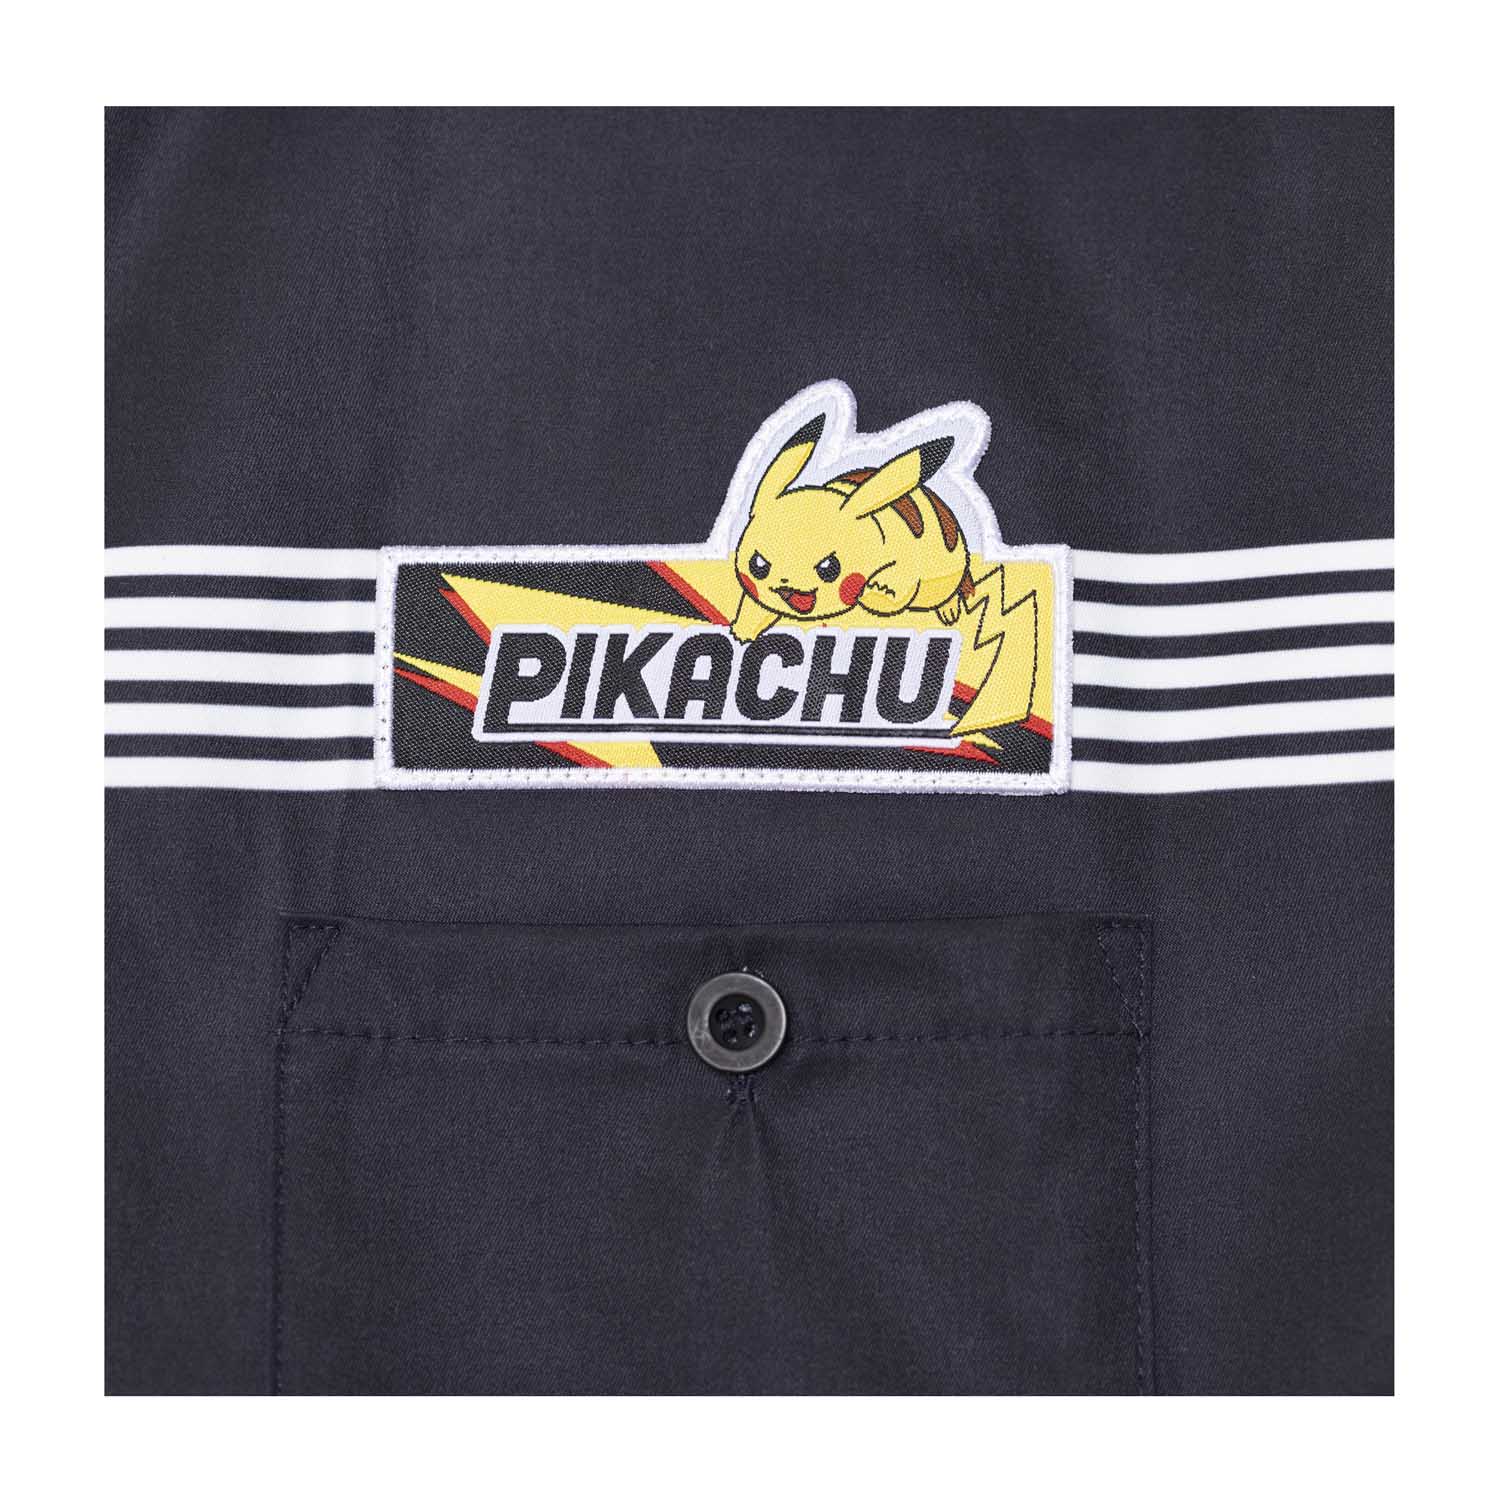 Pikachu Racing Black Short-Sleeve Button-Up Shirt - Adult